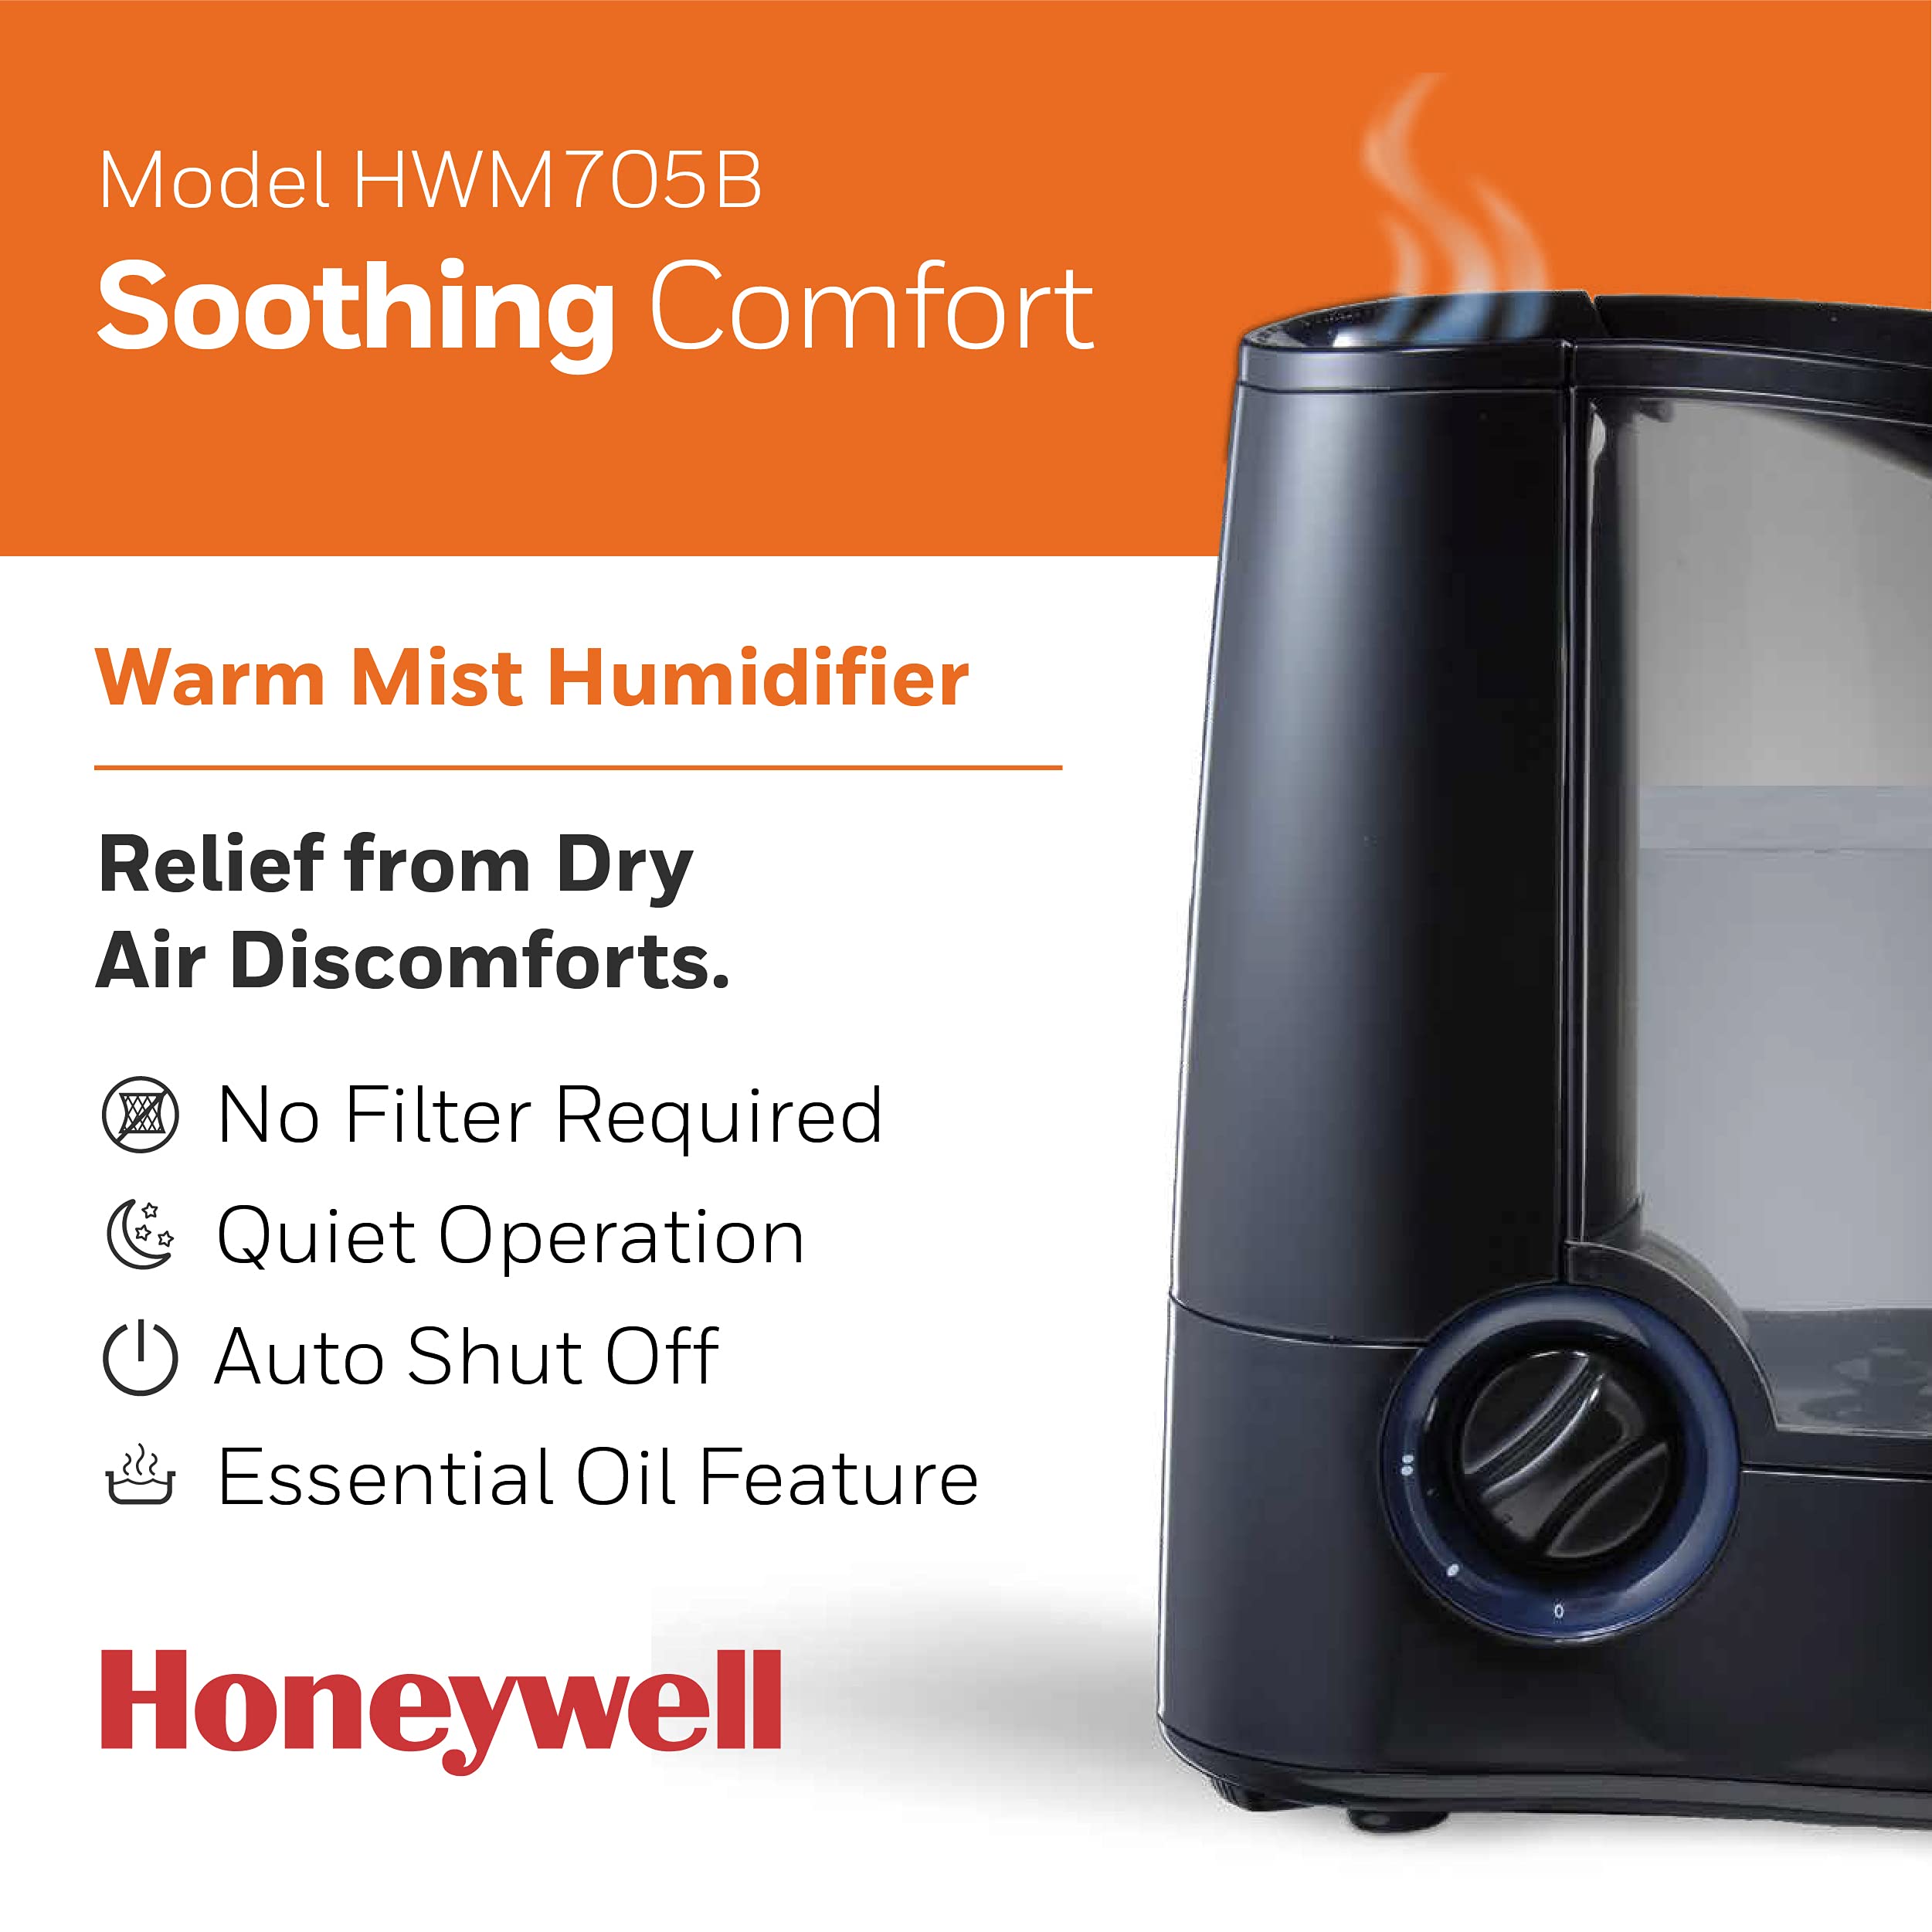 Honeywell HWM705B Filter Free Warm Mist Humidifier - image 3 of 12